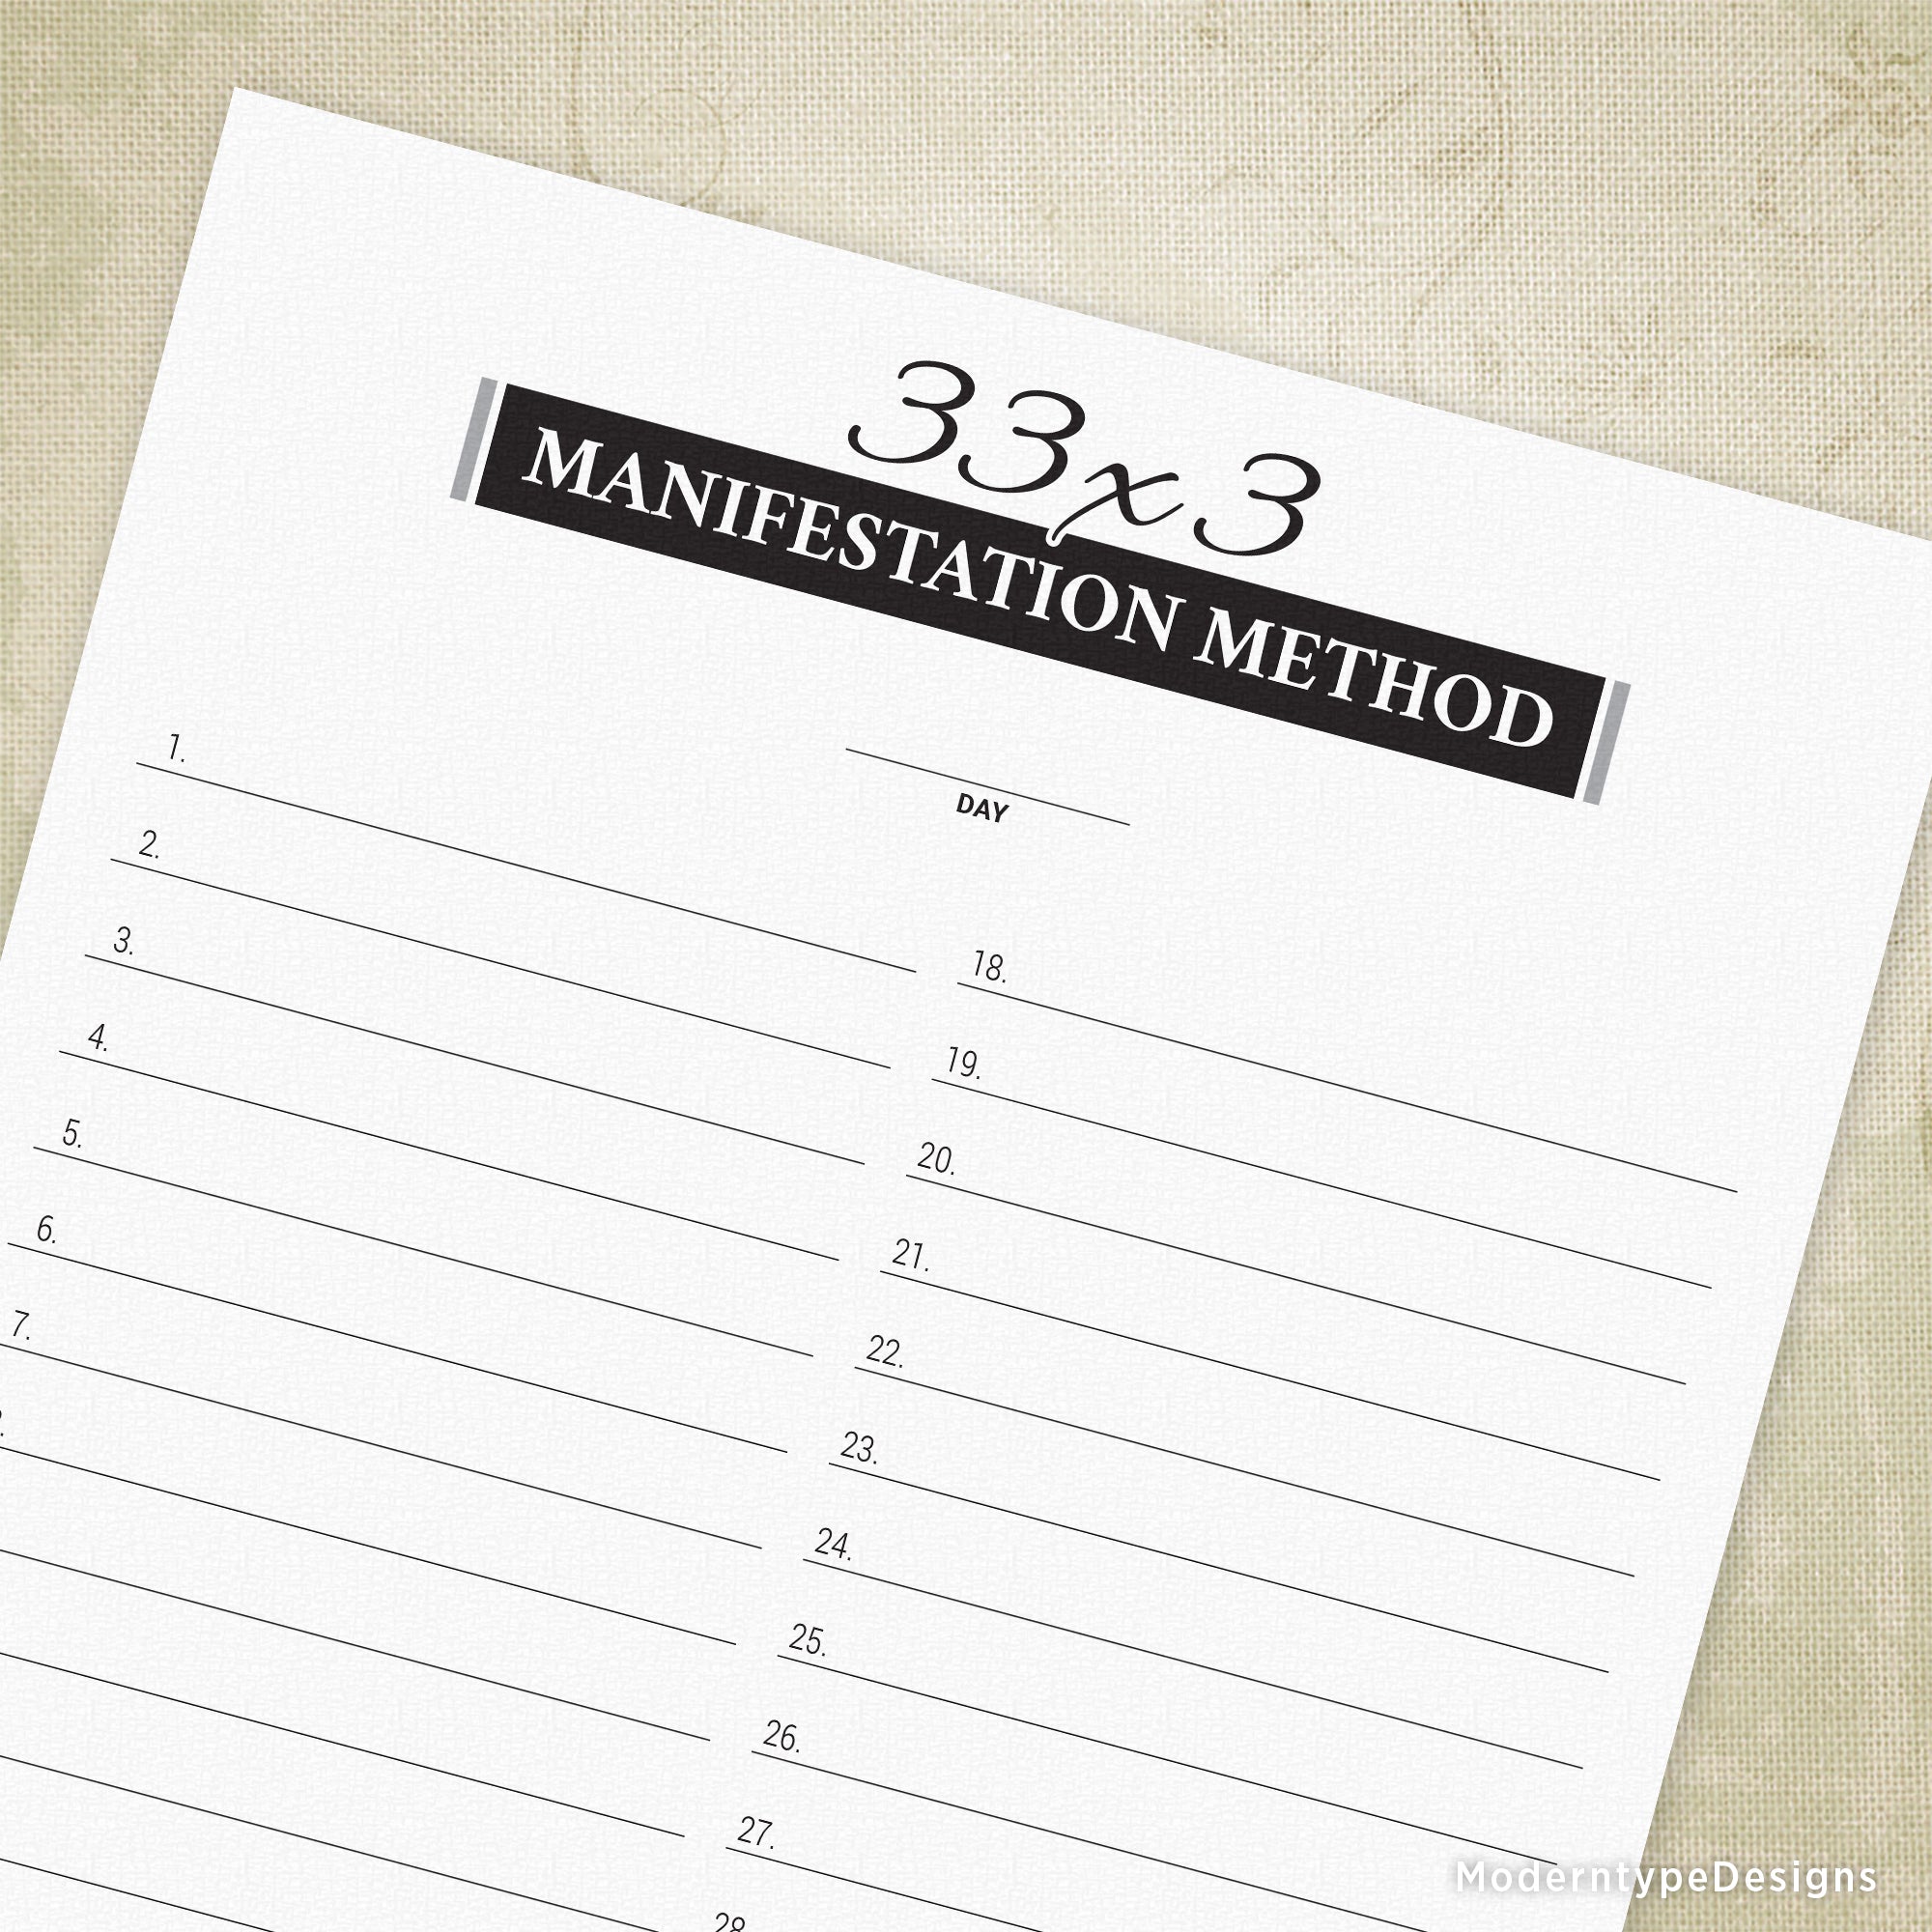 33x3 Manifestation Method Printable